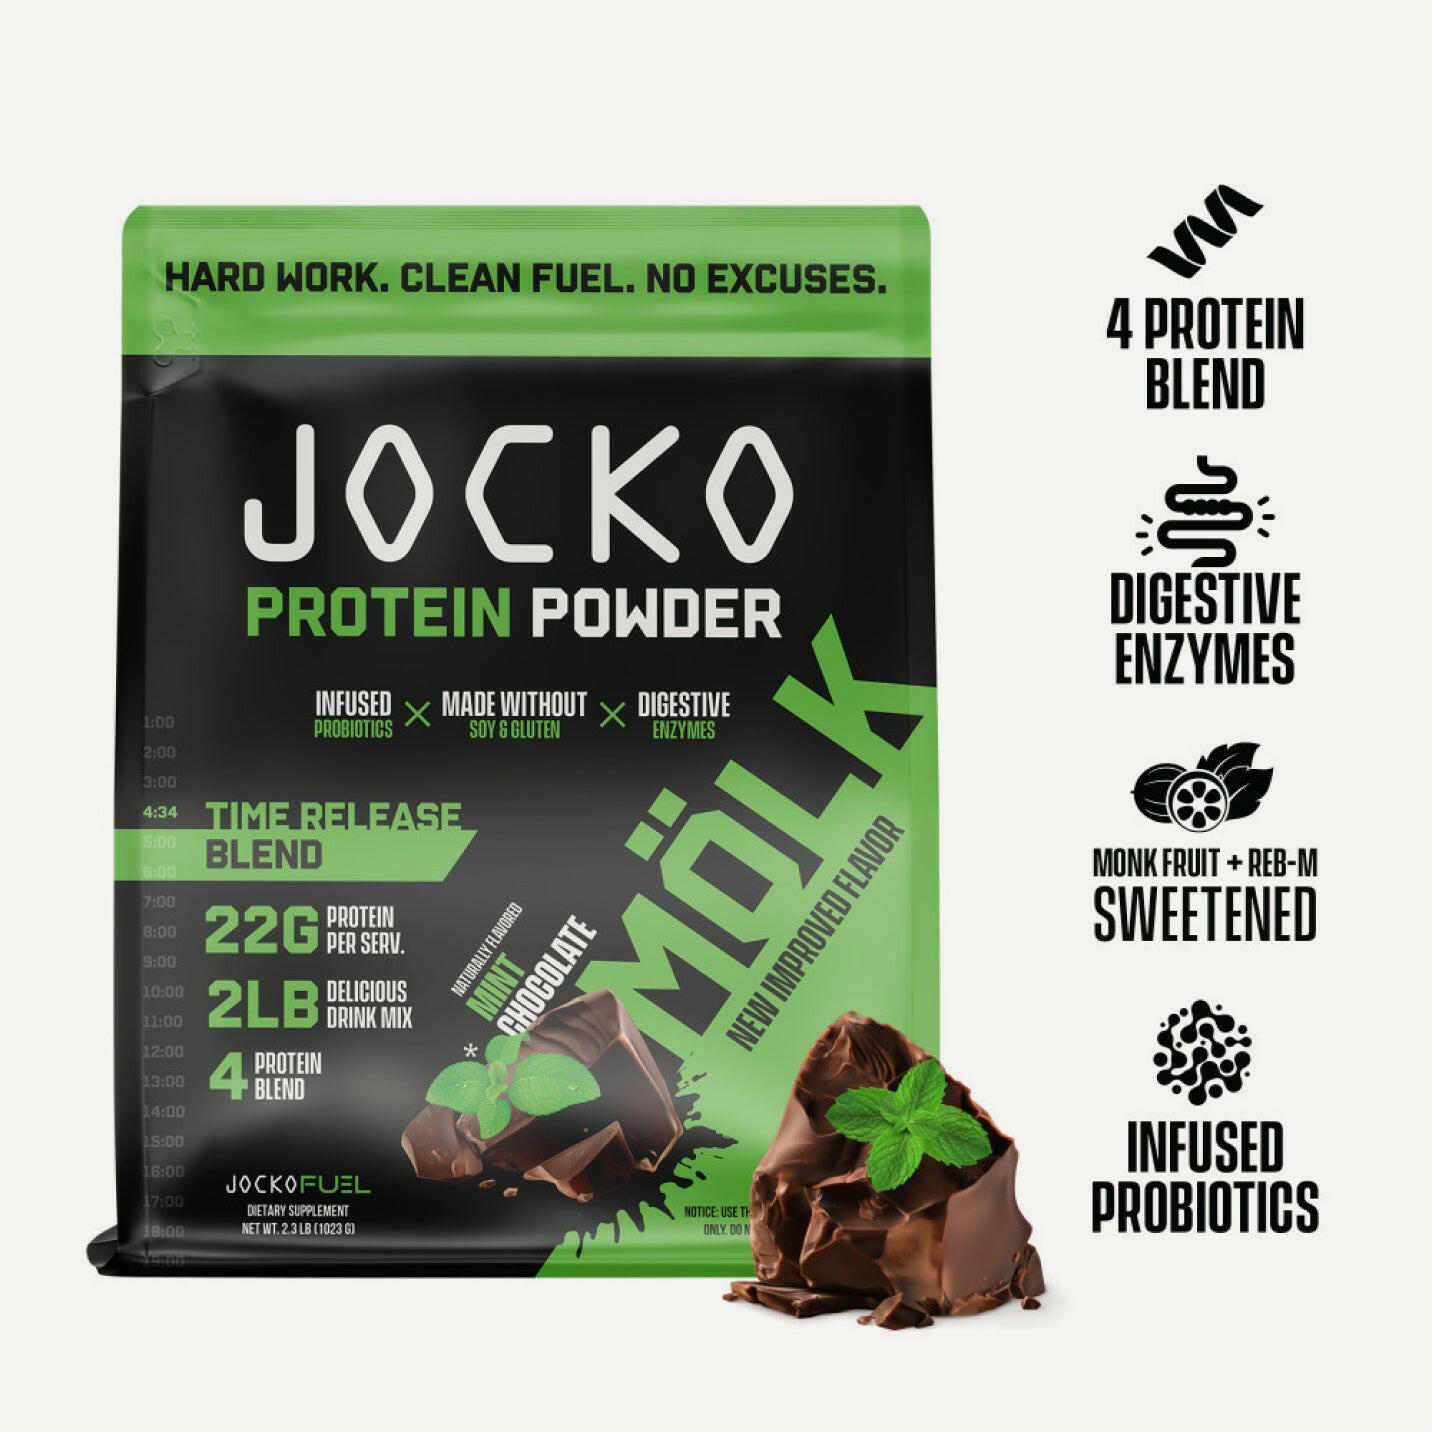 JOCKO FUEL SHAKER CUP – Jocko Fuel